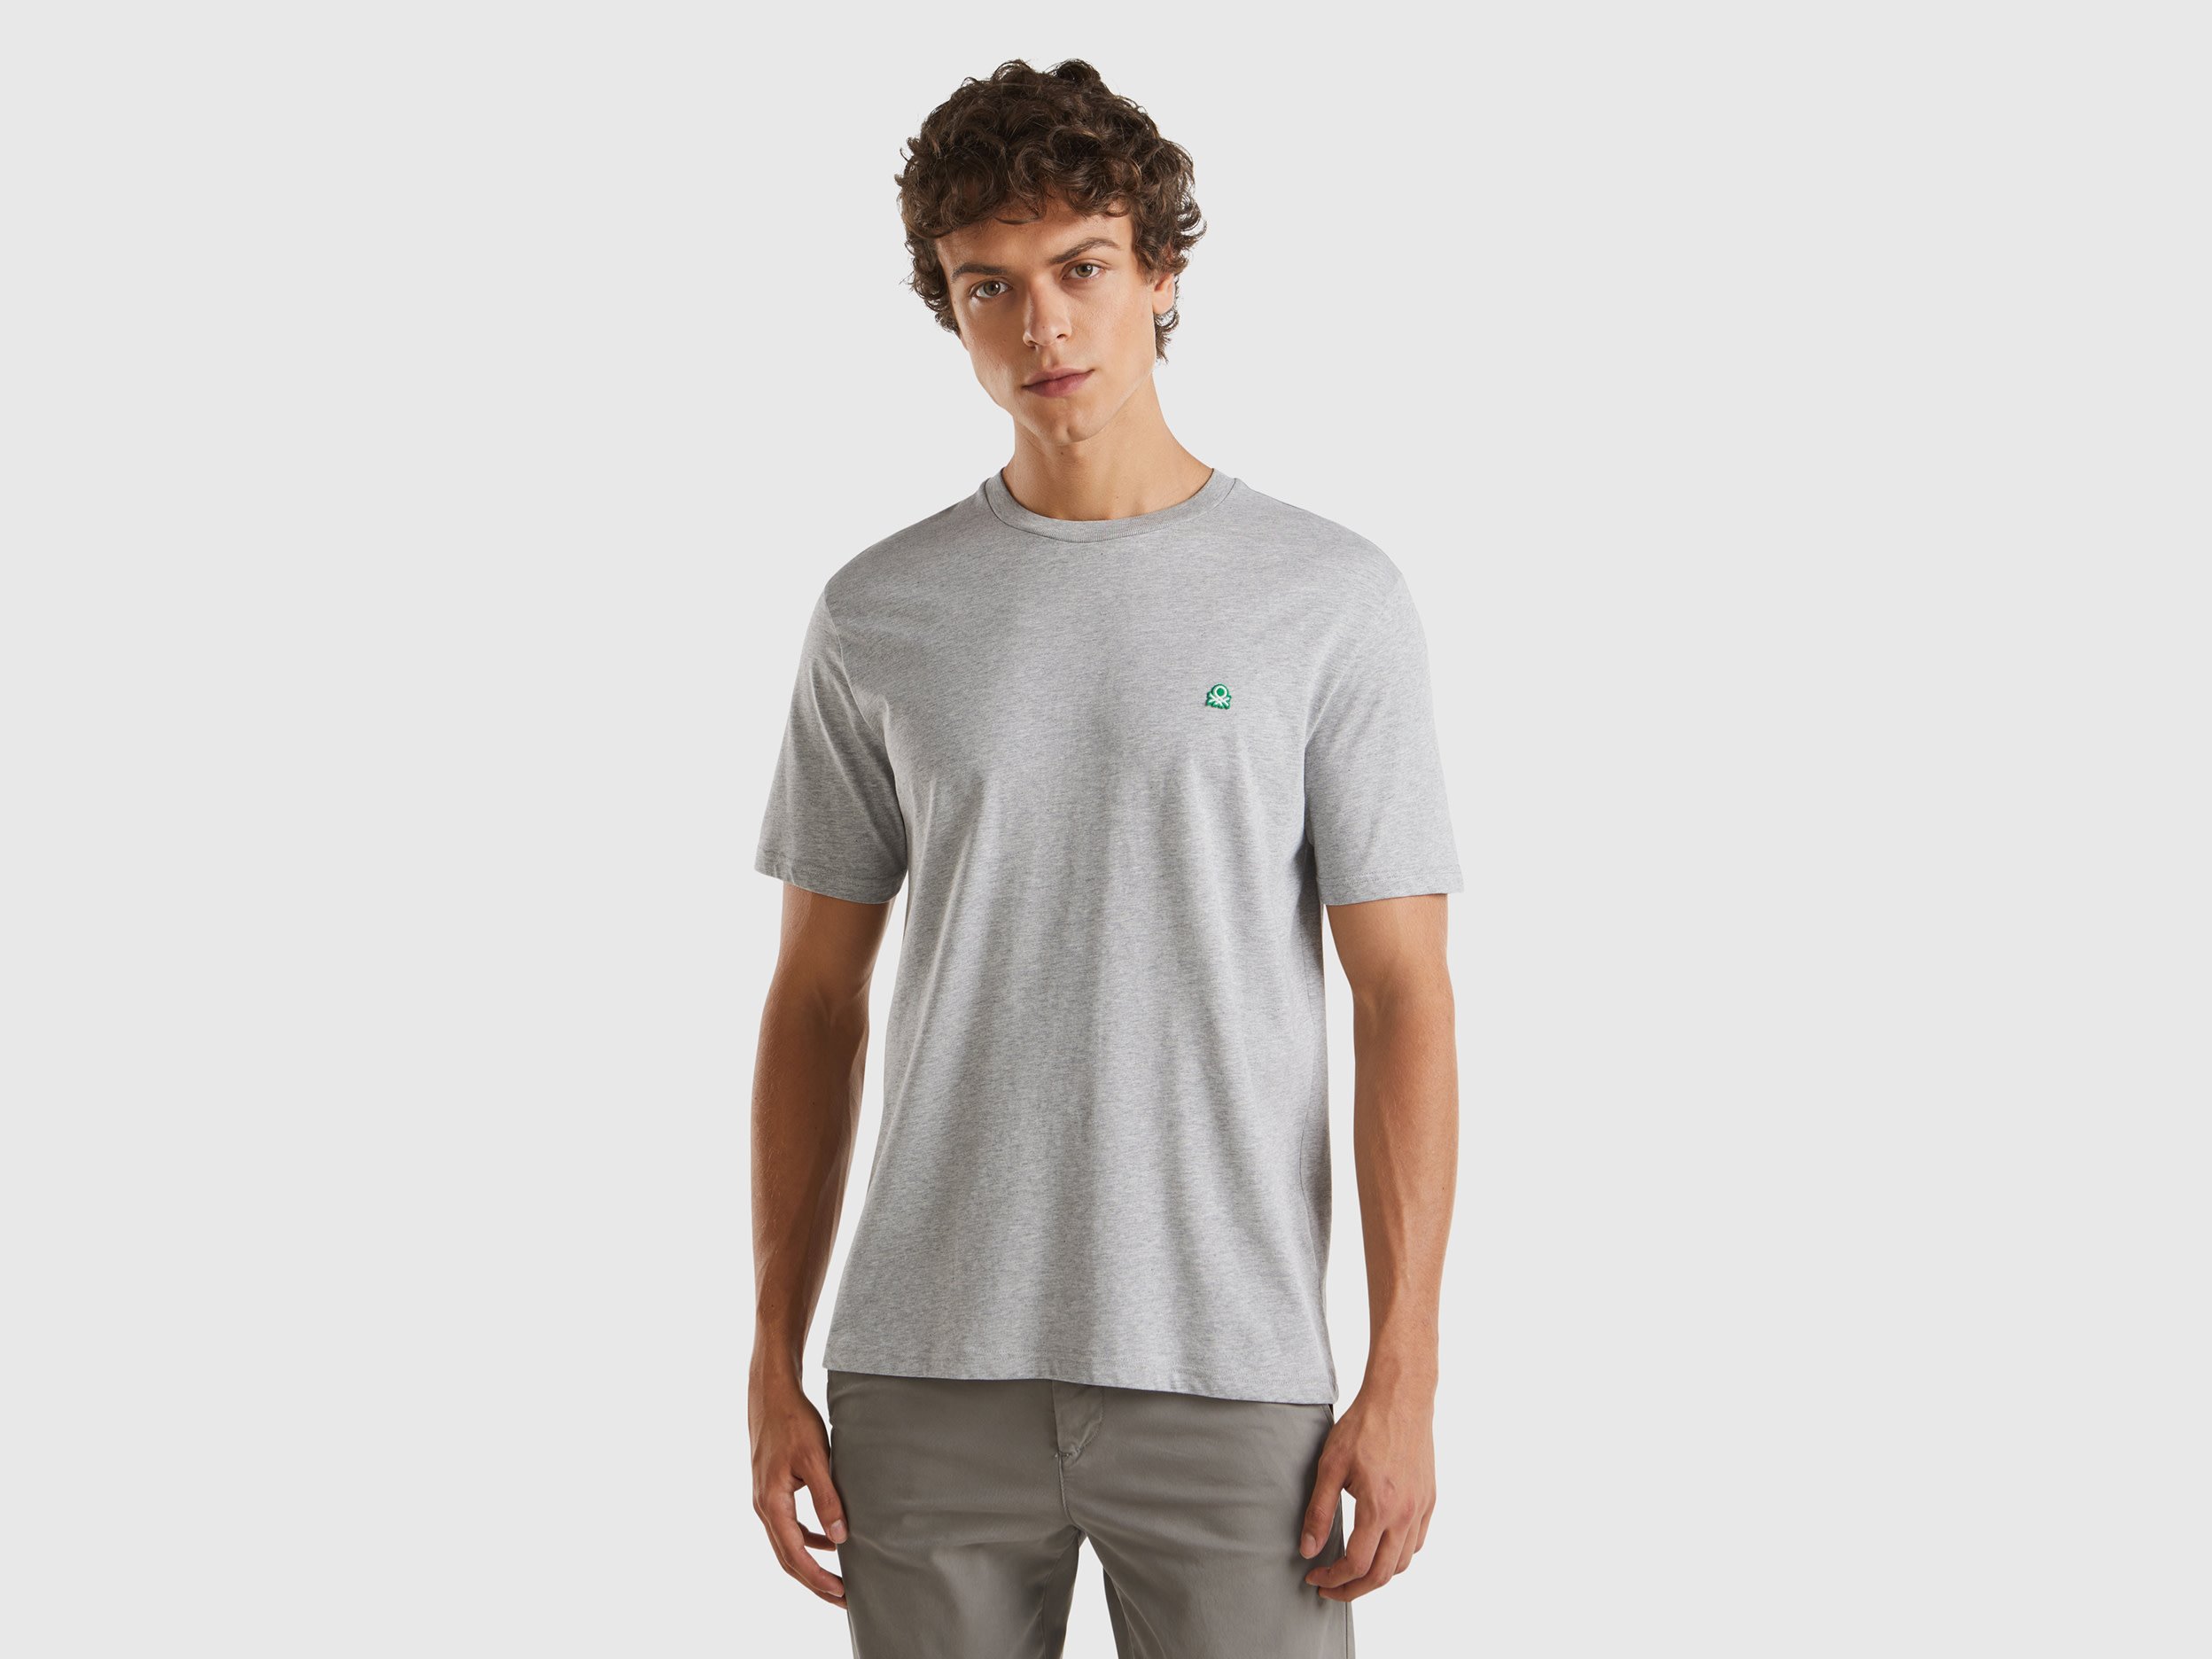 Image of Benetton, 100% Organic Cotton Basic T-shirt, size XL, Light Gray, Men